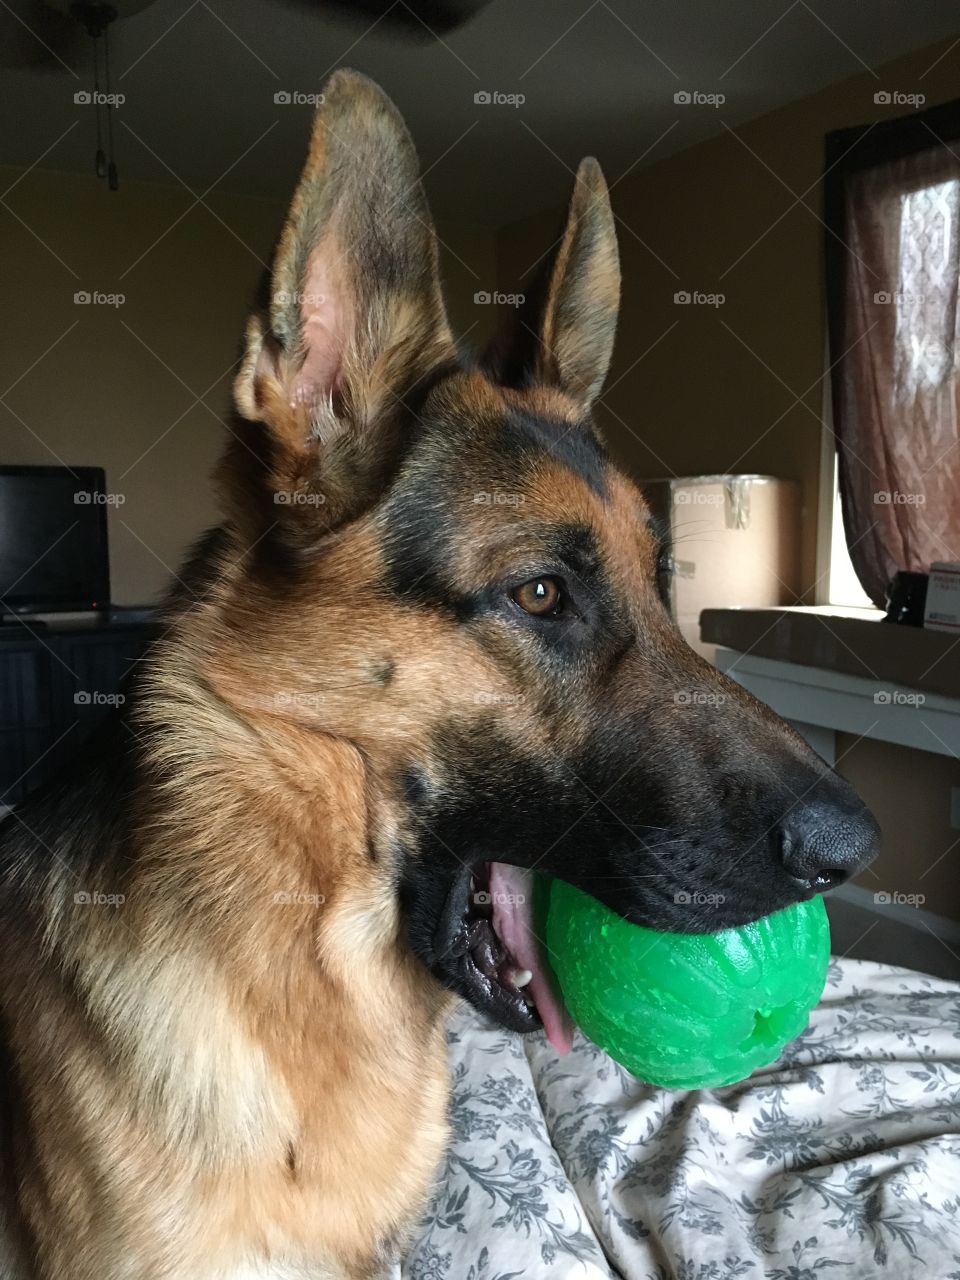 A beautiful dog and his big green ball!